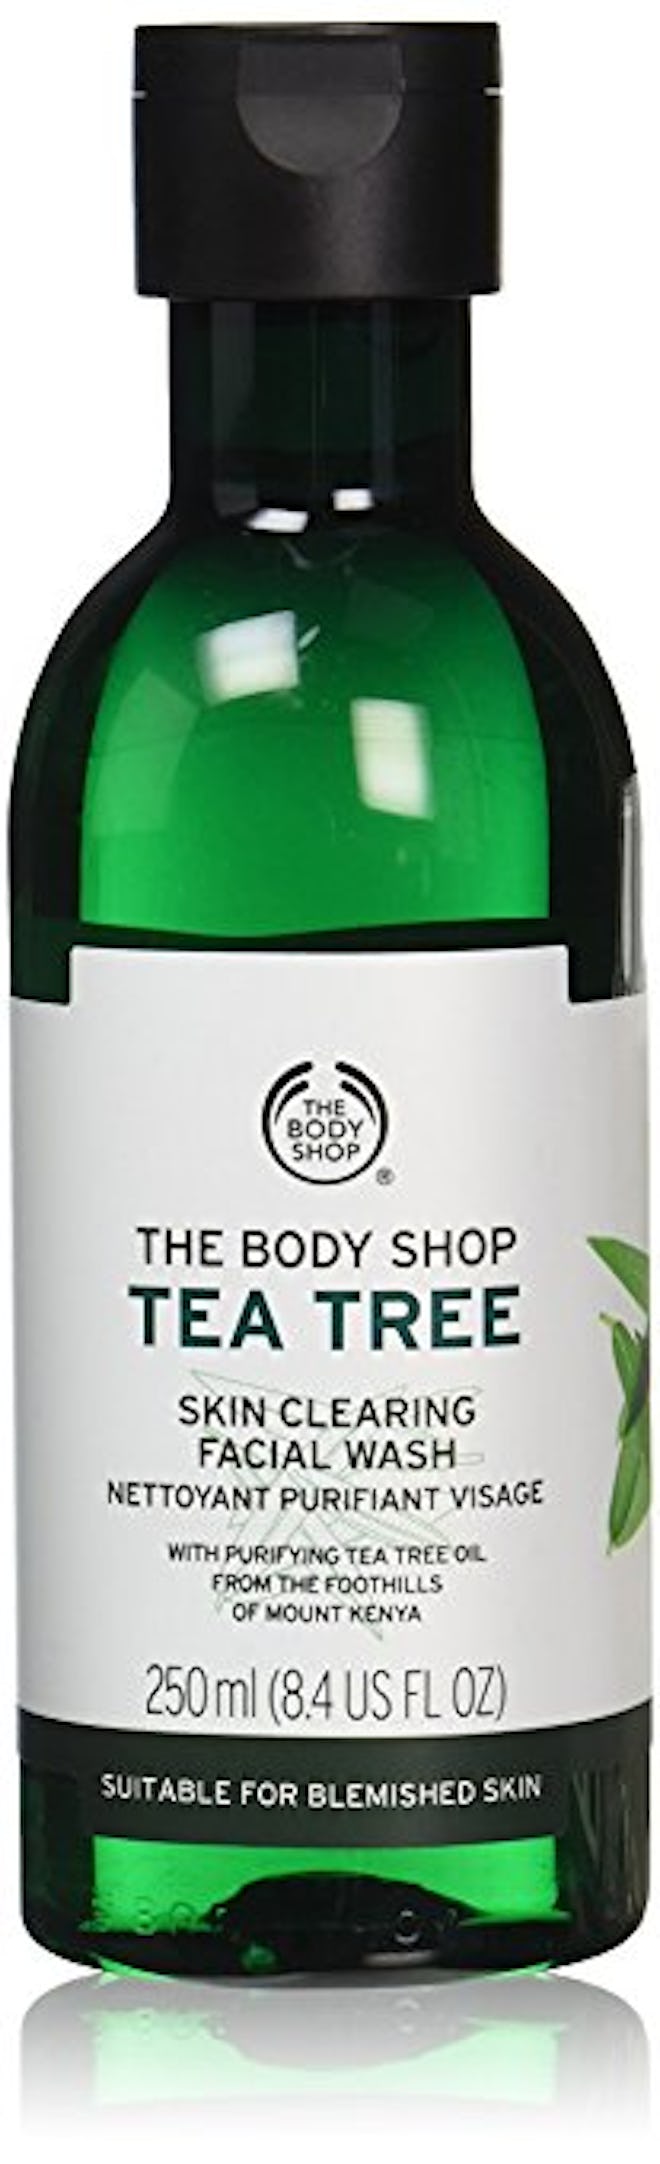 The Body Shop Tea Tree Skin Clearing Facial Wash, 8.4 Fl Oz